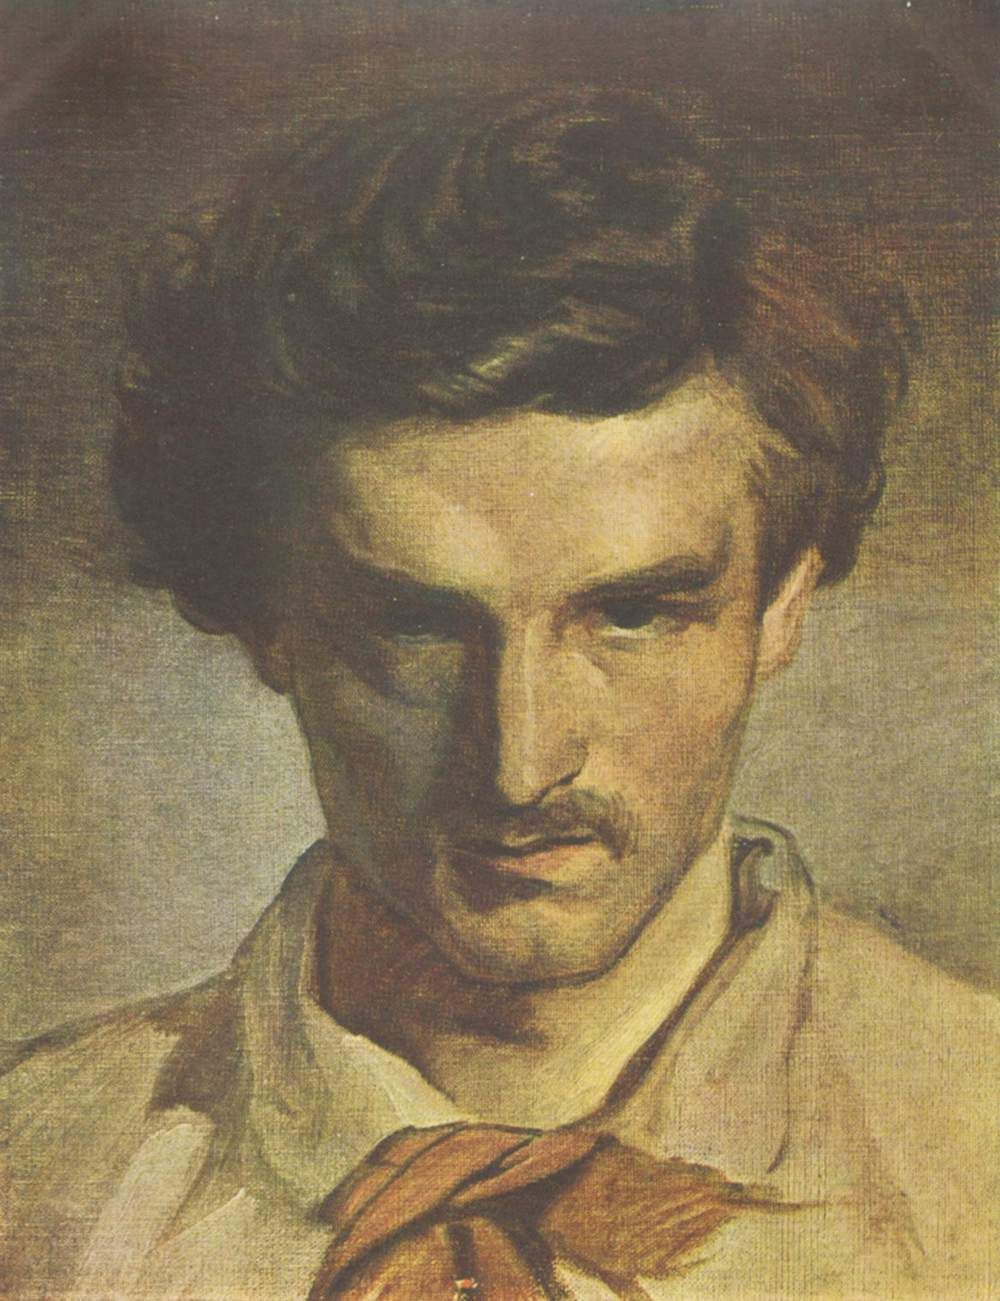 Anselm Frederick Feuerbach. Self-portrait